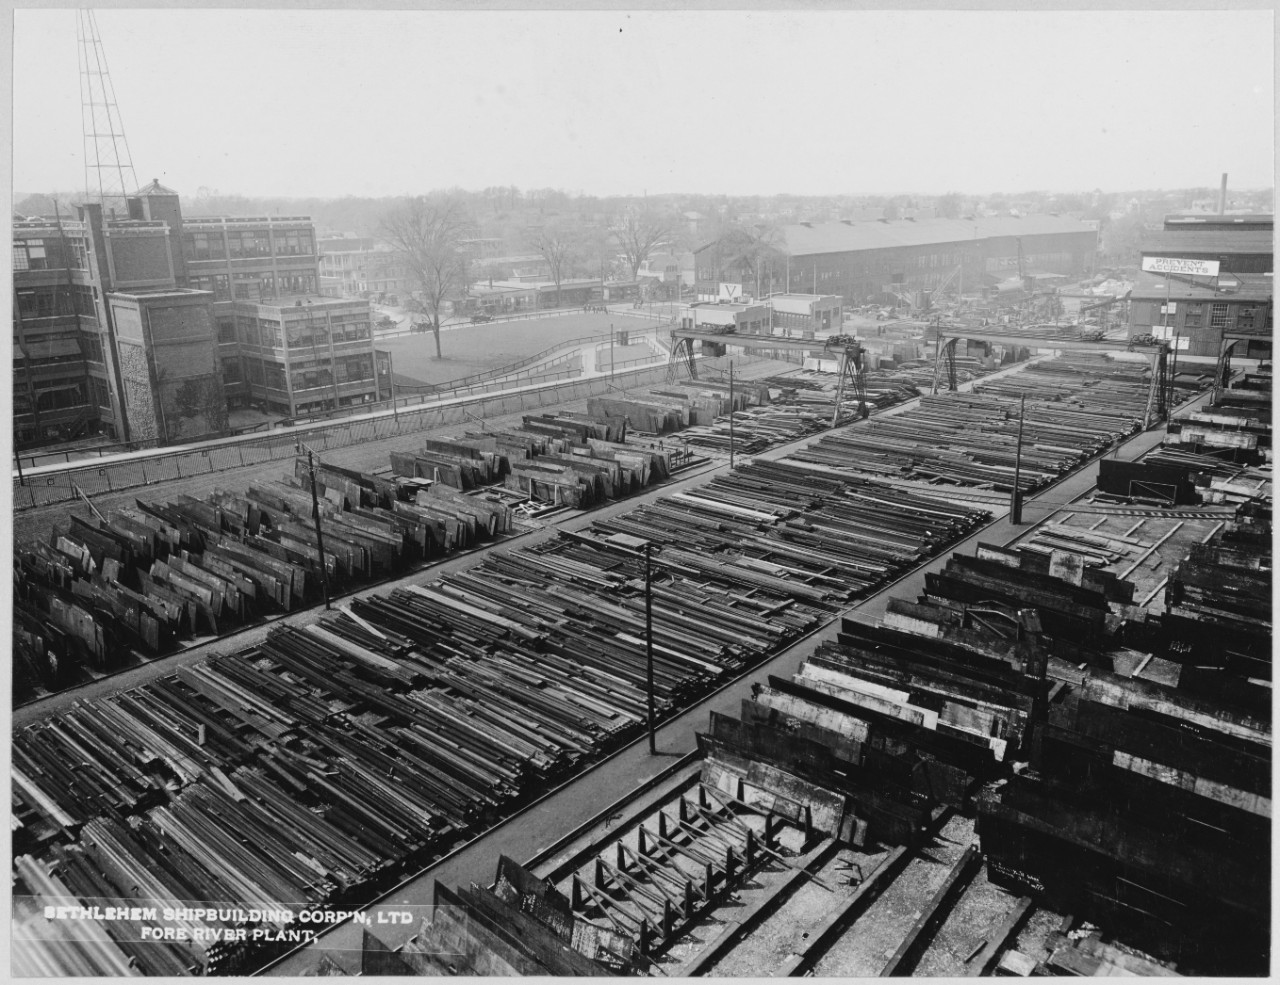 Plate yard, Fore River Plant, Bethlehem Shipbuilding Corporation, Ltd.